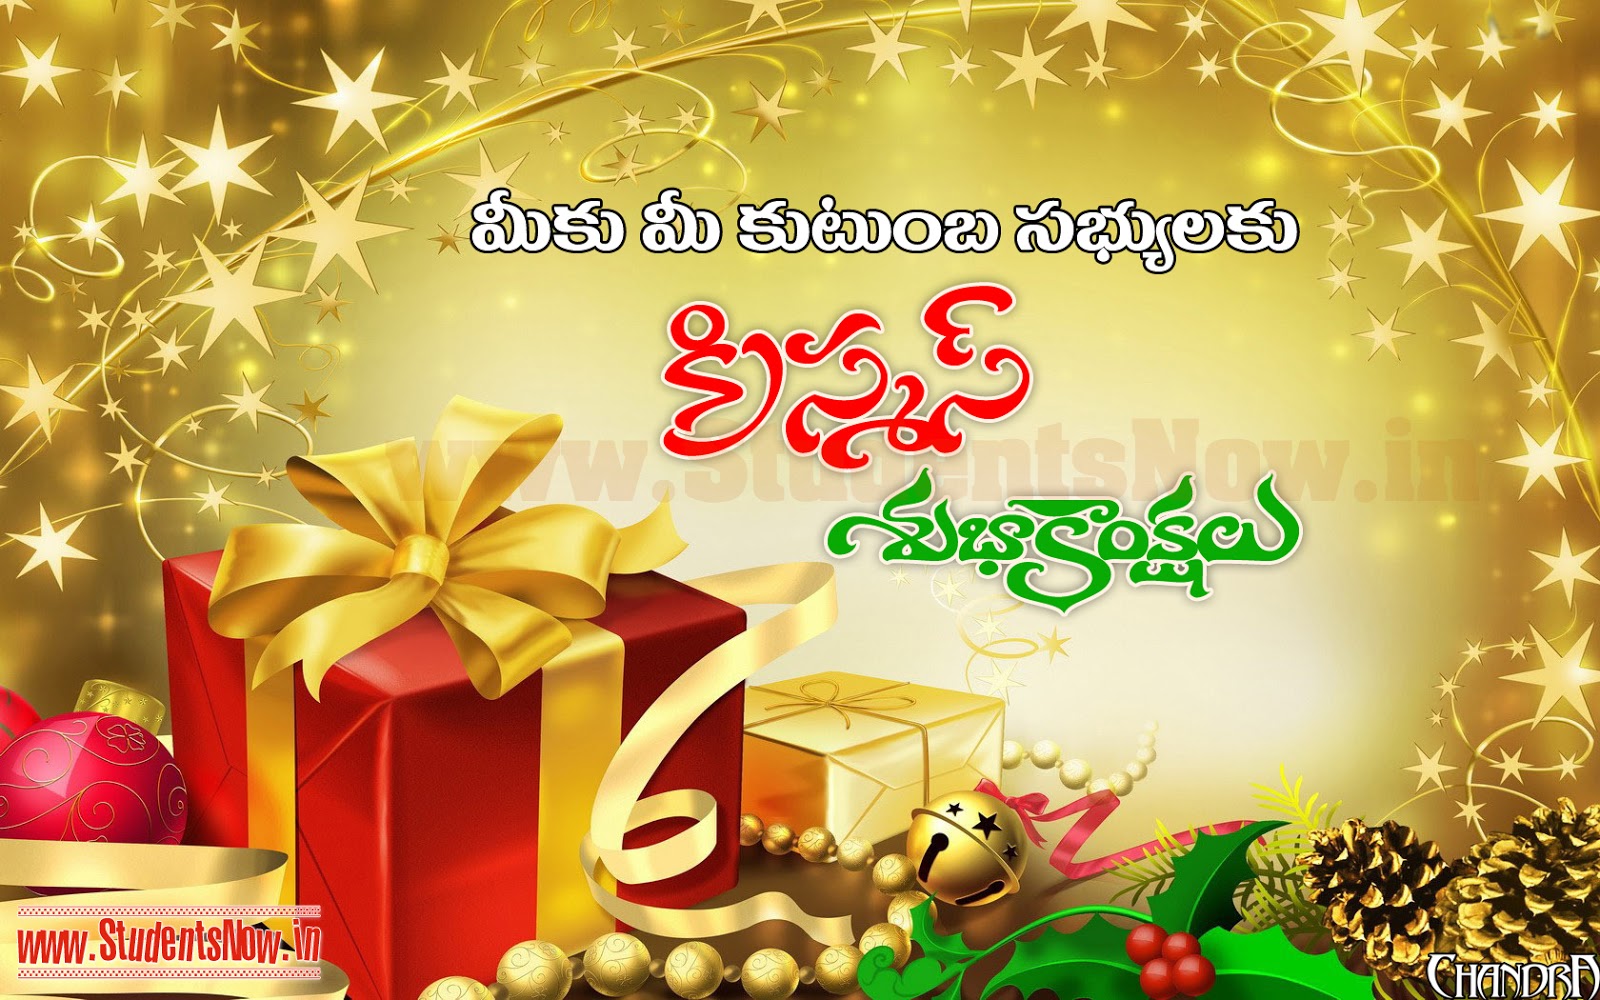 http://4.bp.blogspot.com/-ohiTx8lIMXc/UNXNkyZtEQI/AAAAAAAAQI0/-aMOMsx-Yug/s1600/Christmas+Greetings+Telugu+-+StudentsNow.n..jpg